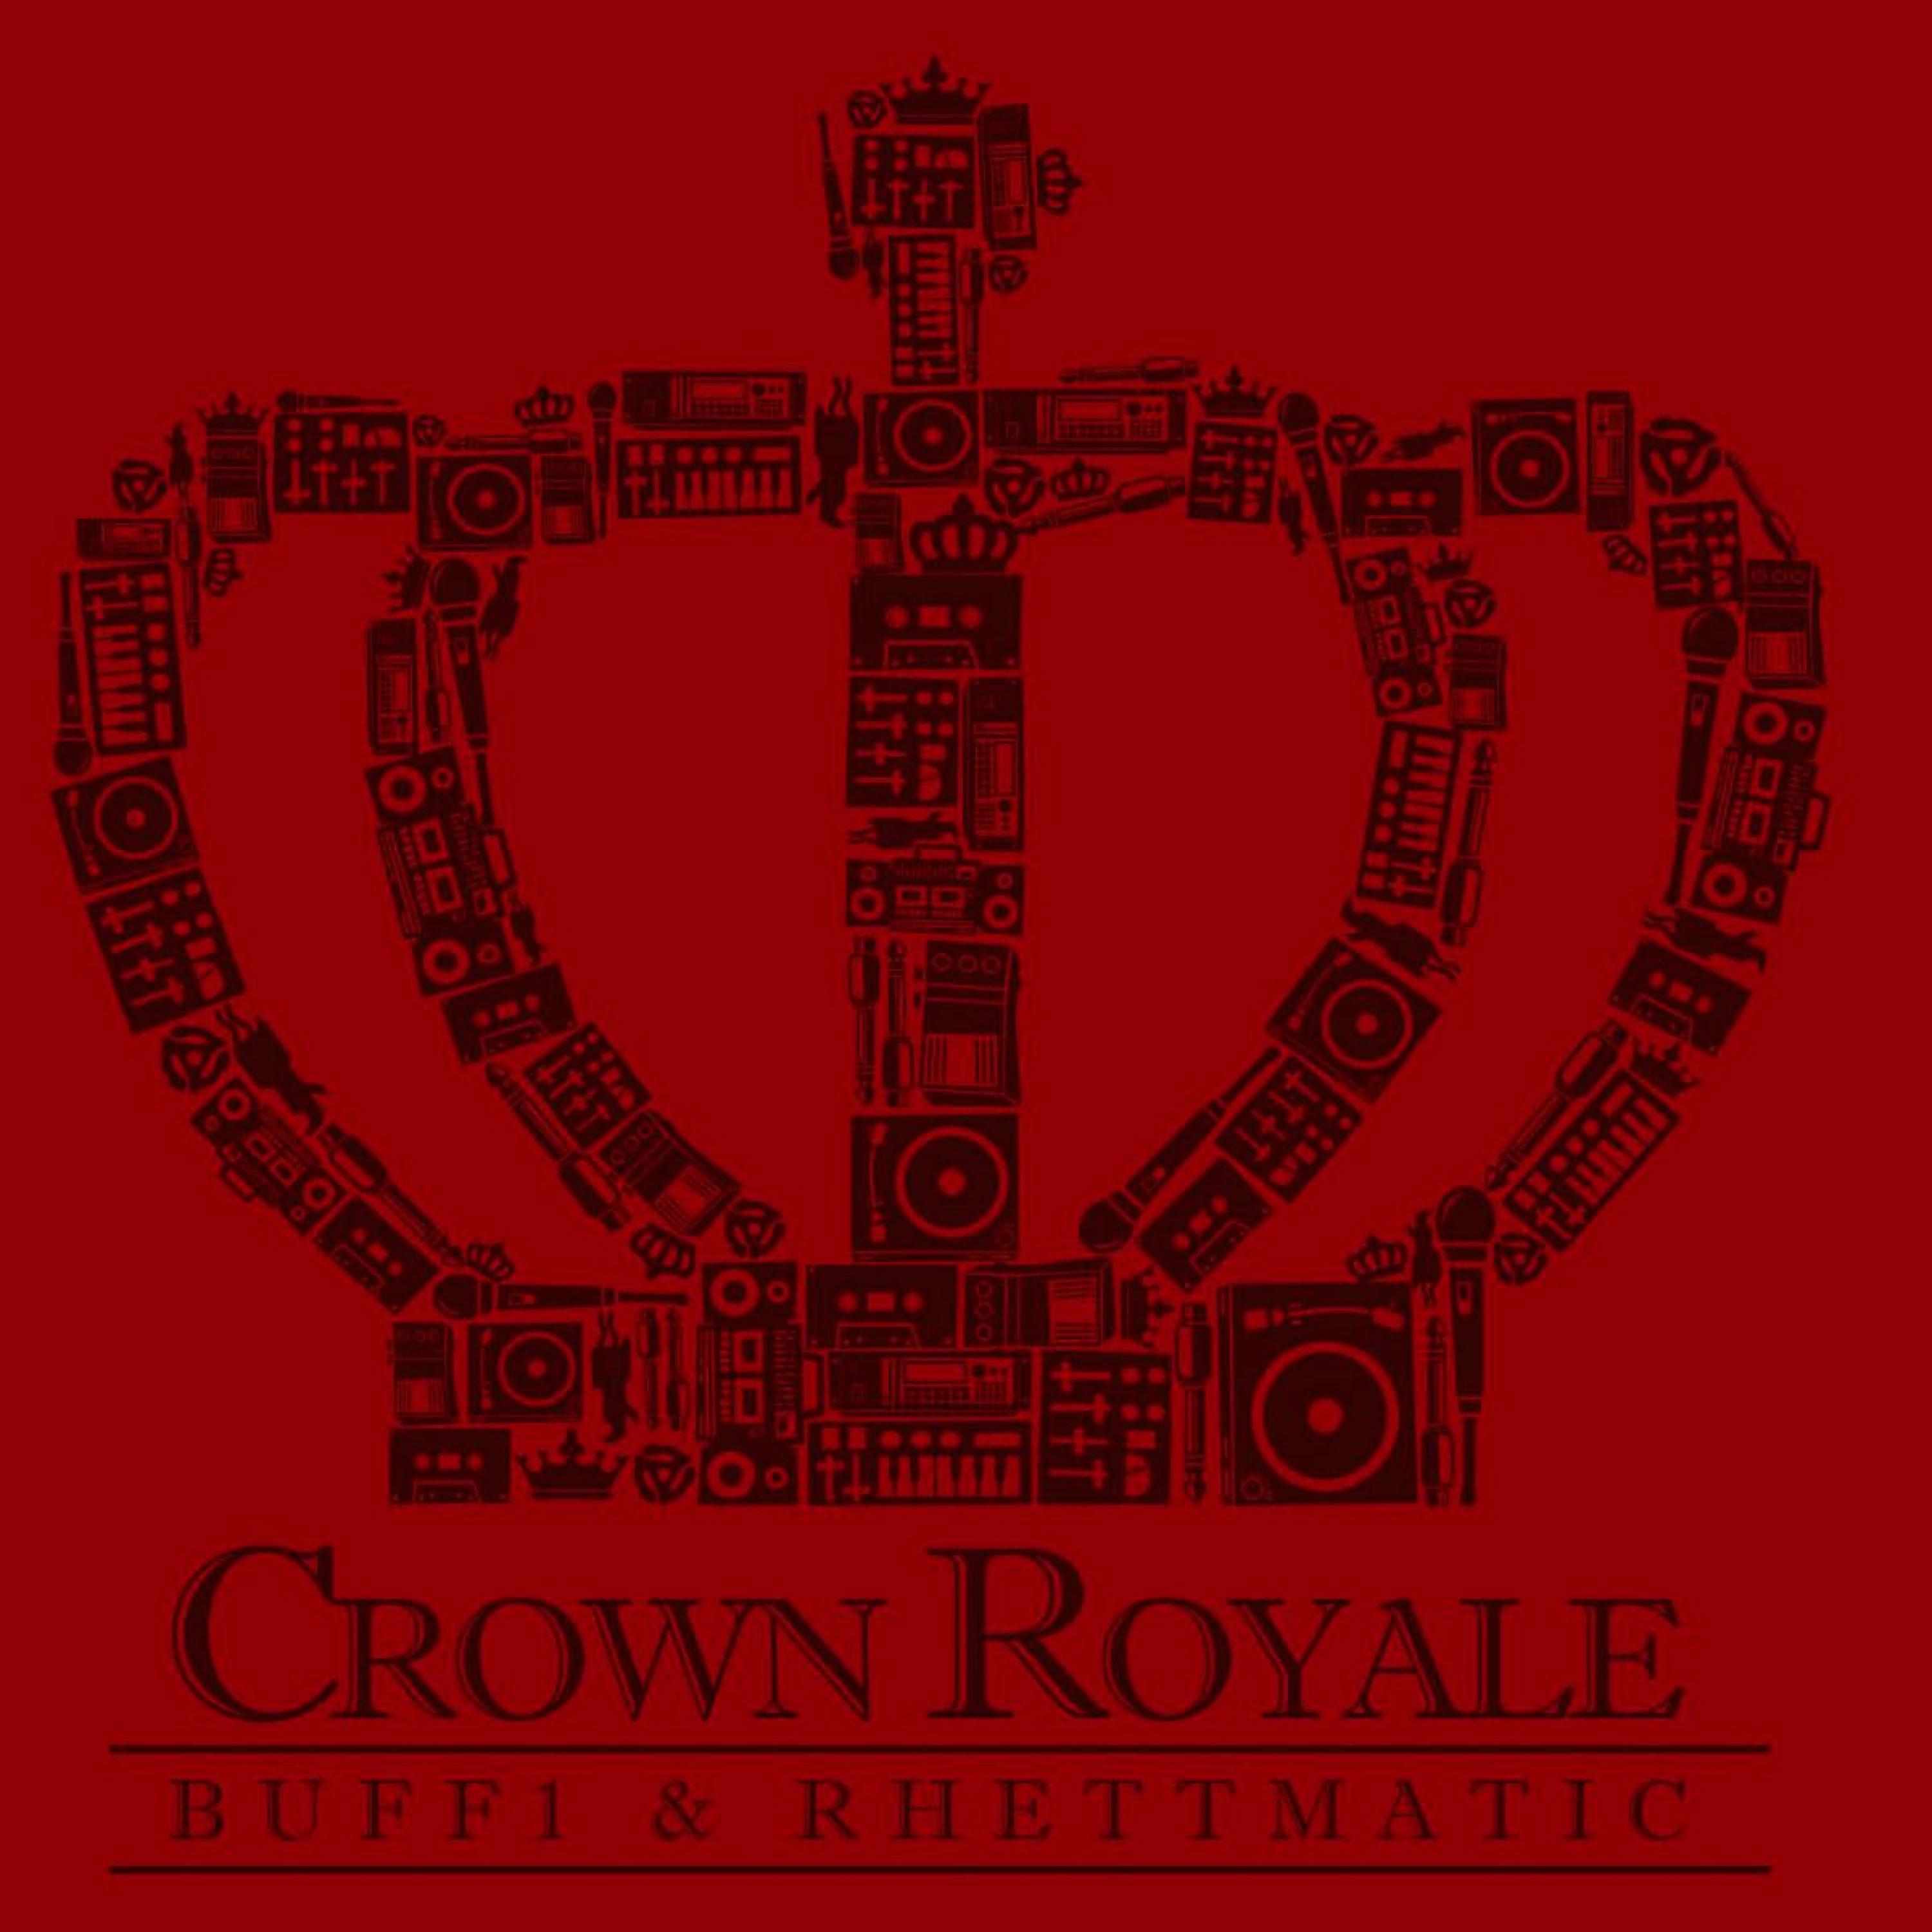 Buff1 & DJ Rhettmatic Are Crown Royale